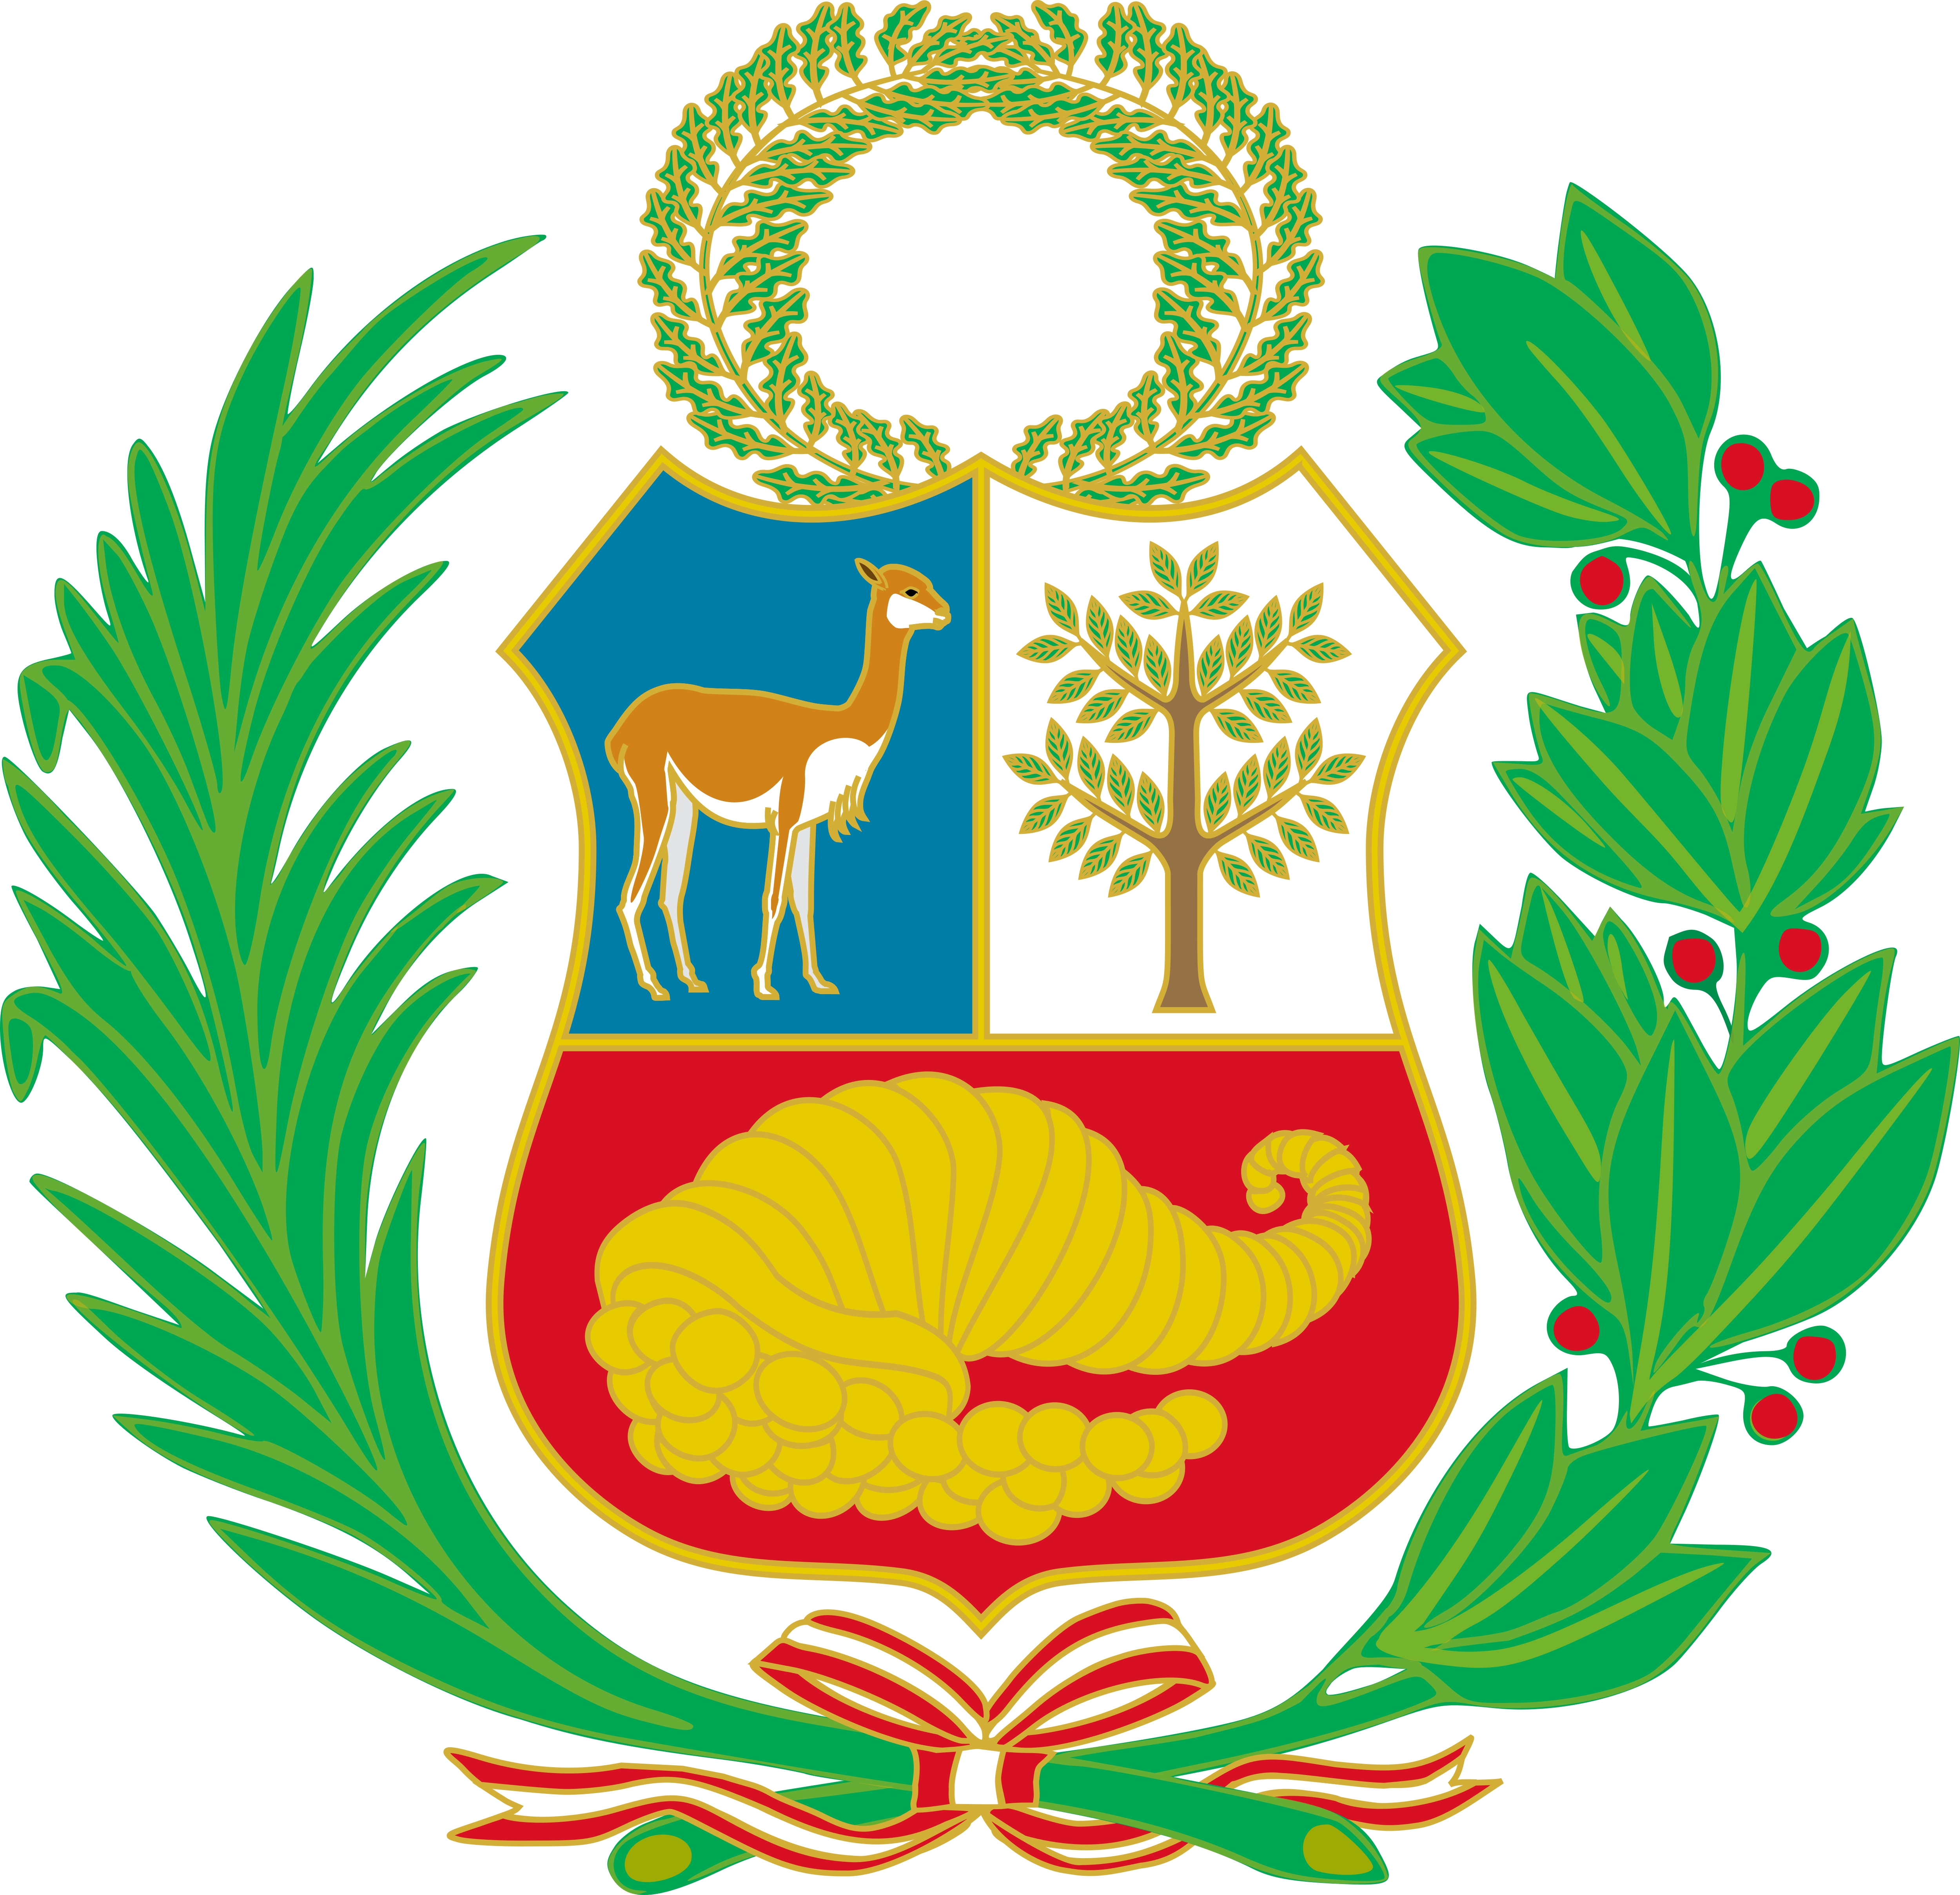 Перу знаки